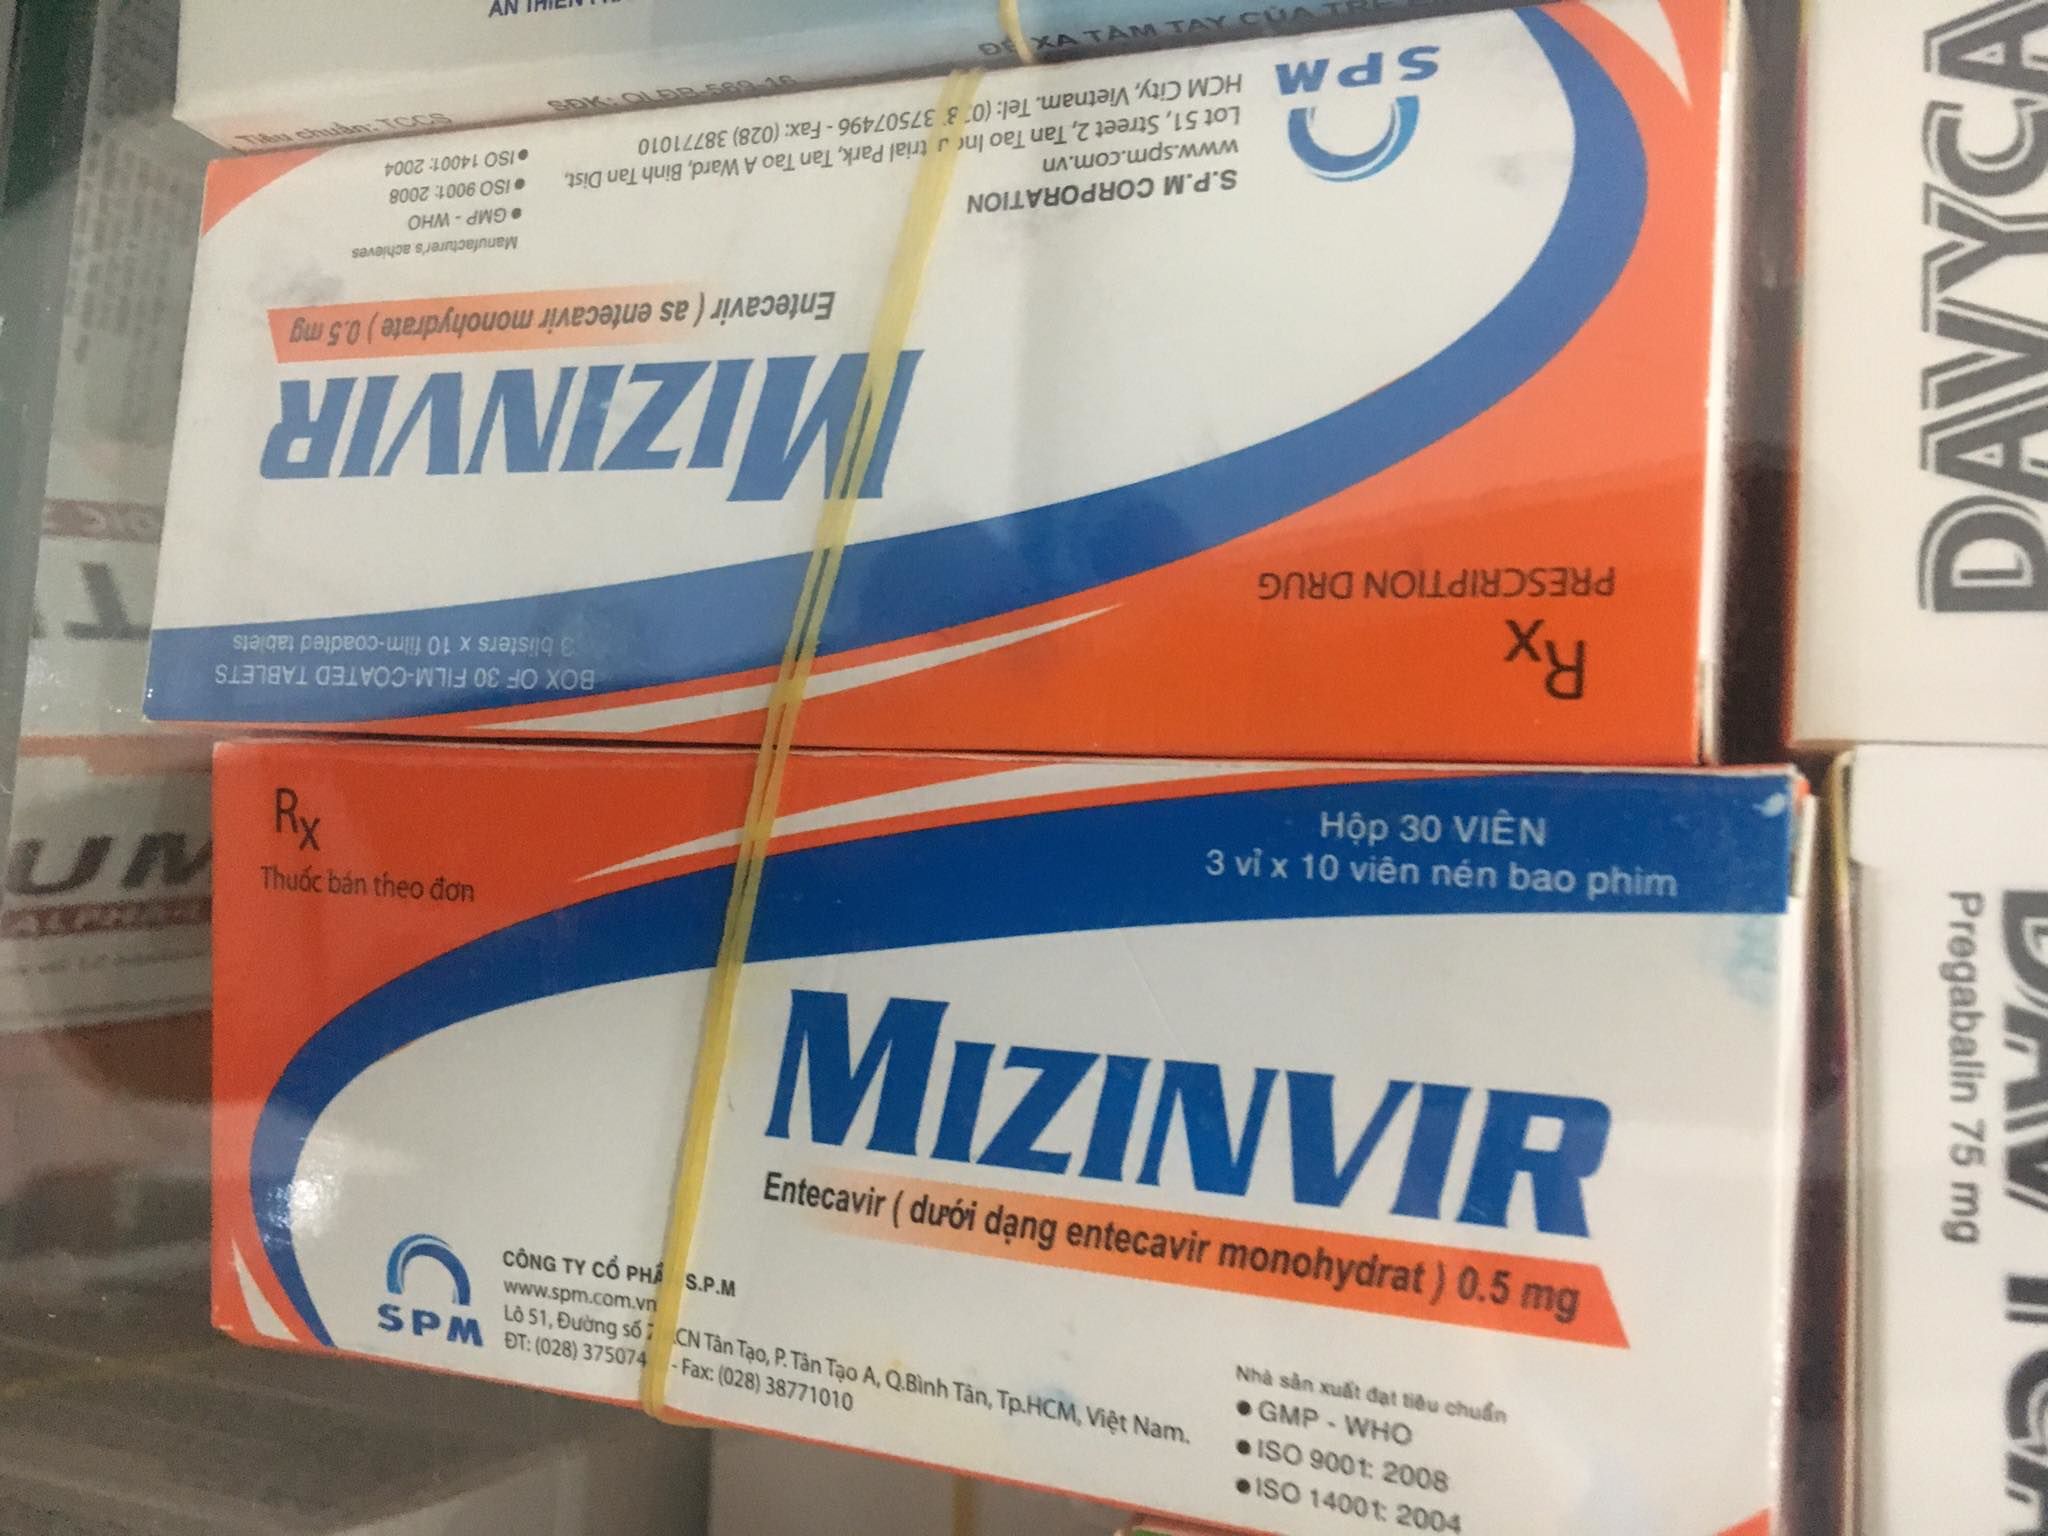 Mizinvir